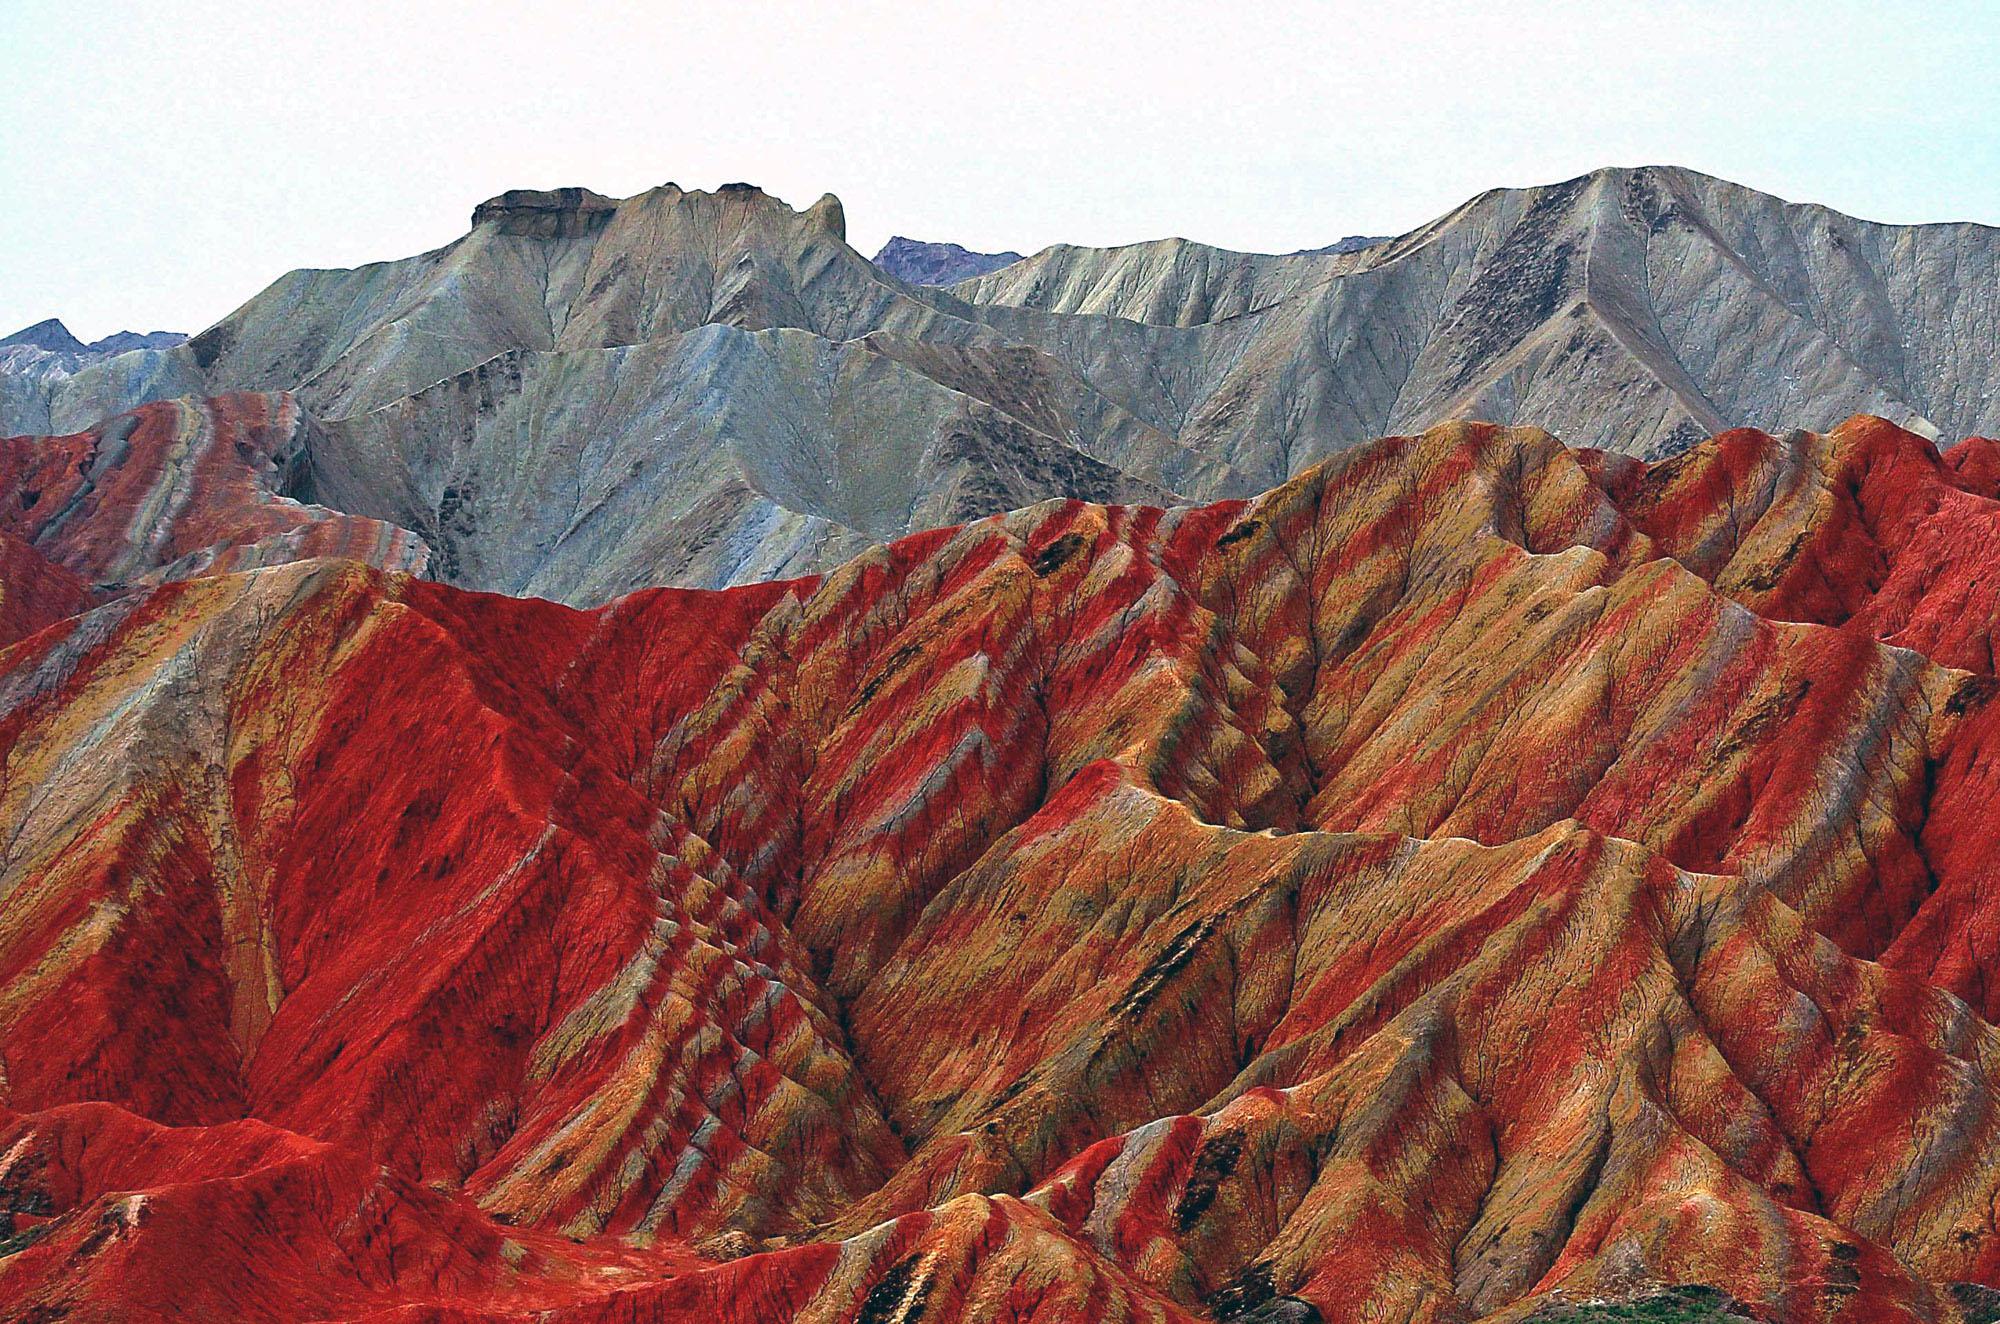 The Dramatic Landscape of China's Gansu Province